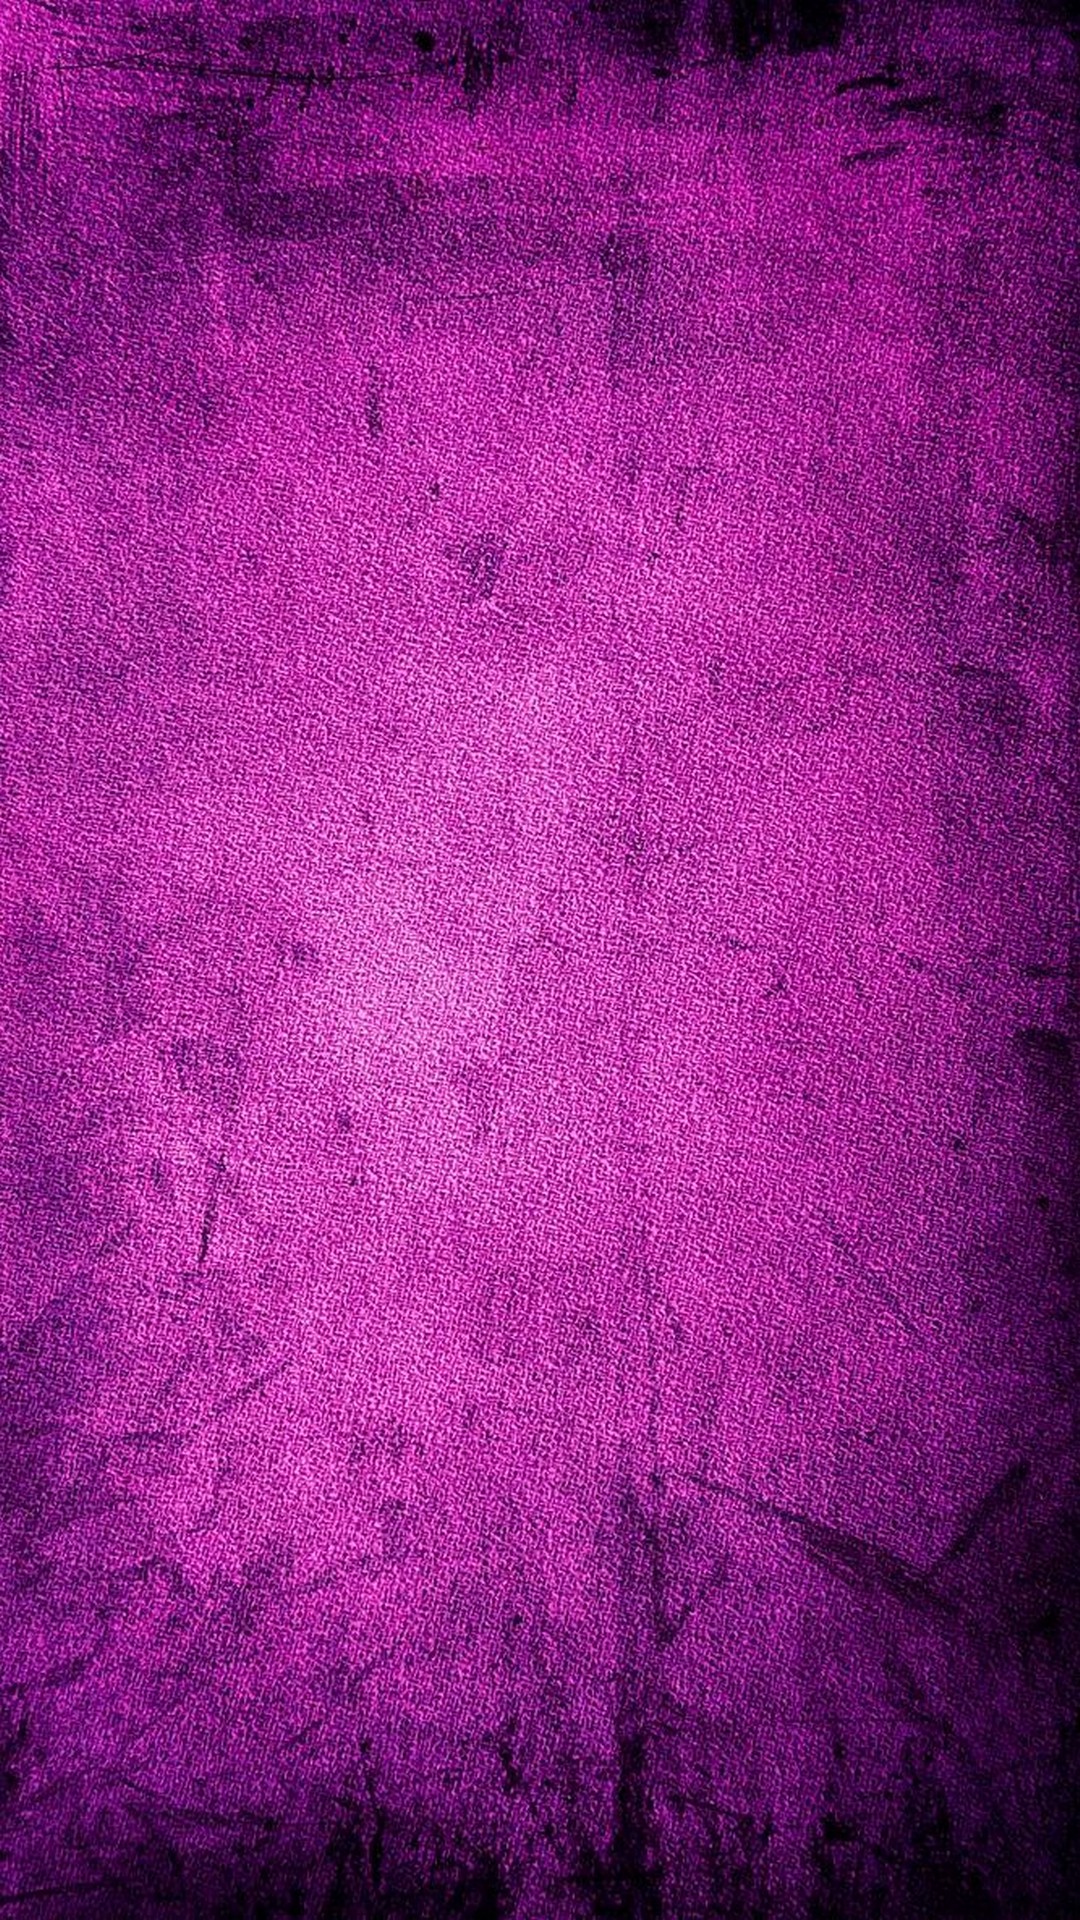 Purple Vintage Fabric iPhone Wallpaper resolution 1080x1920